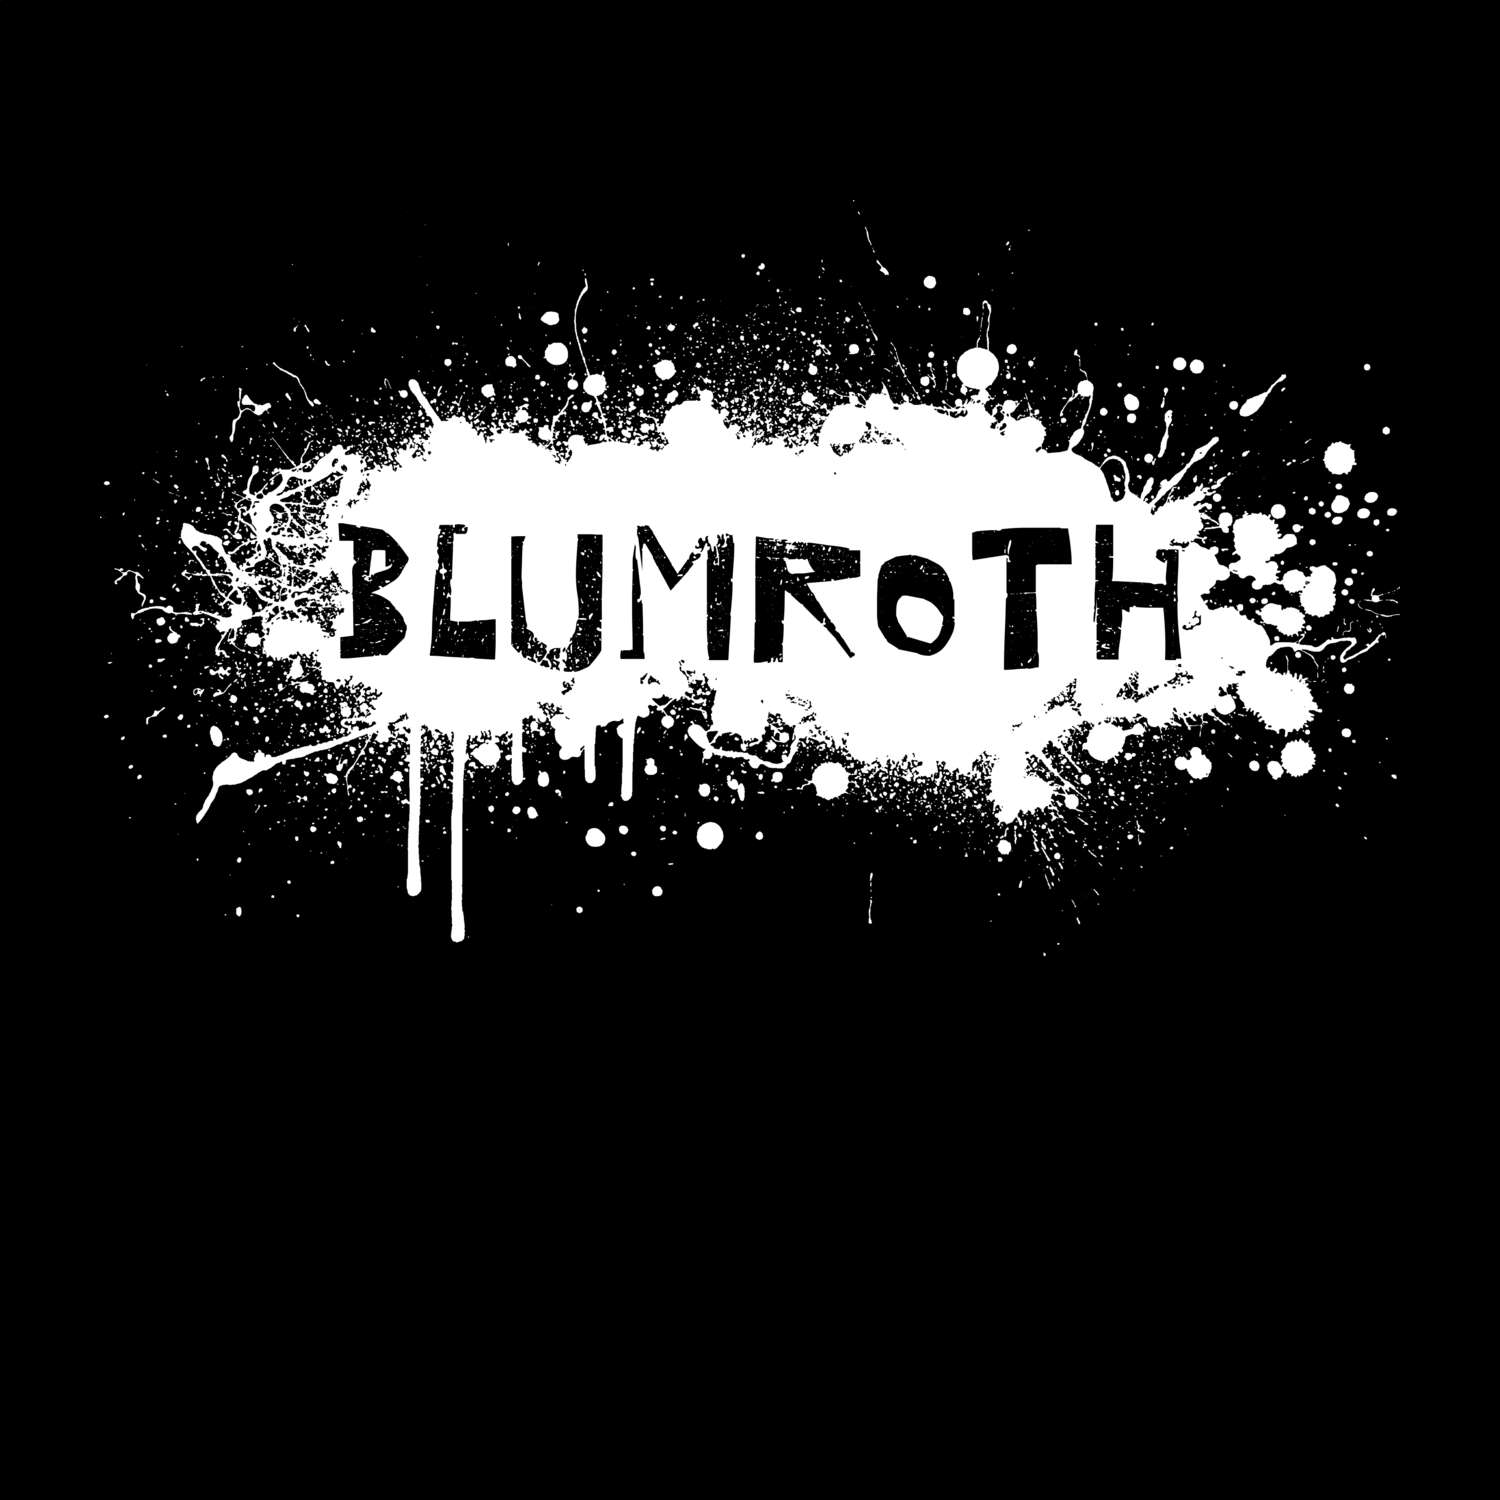 Blumroth T-Shirt »Paint Splash Punk«